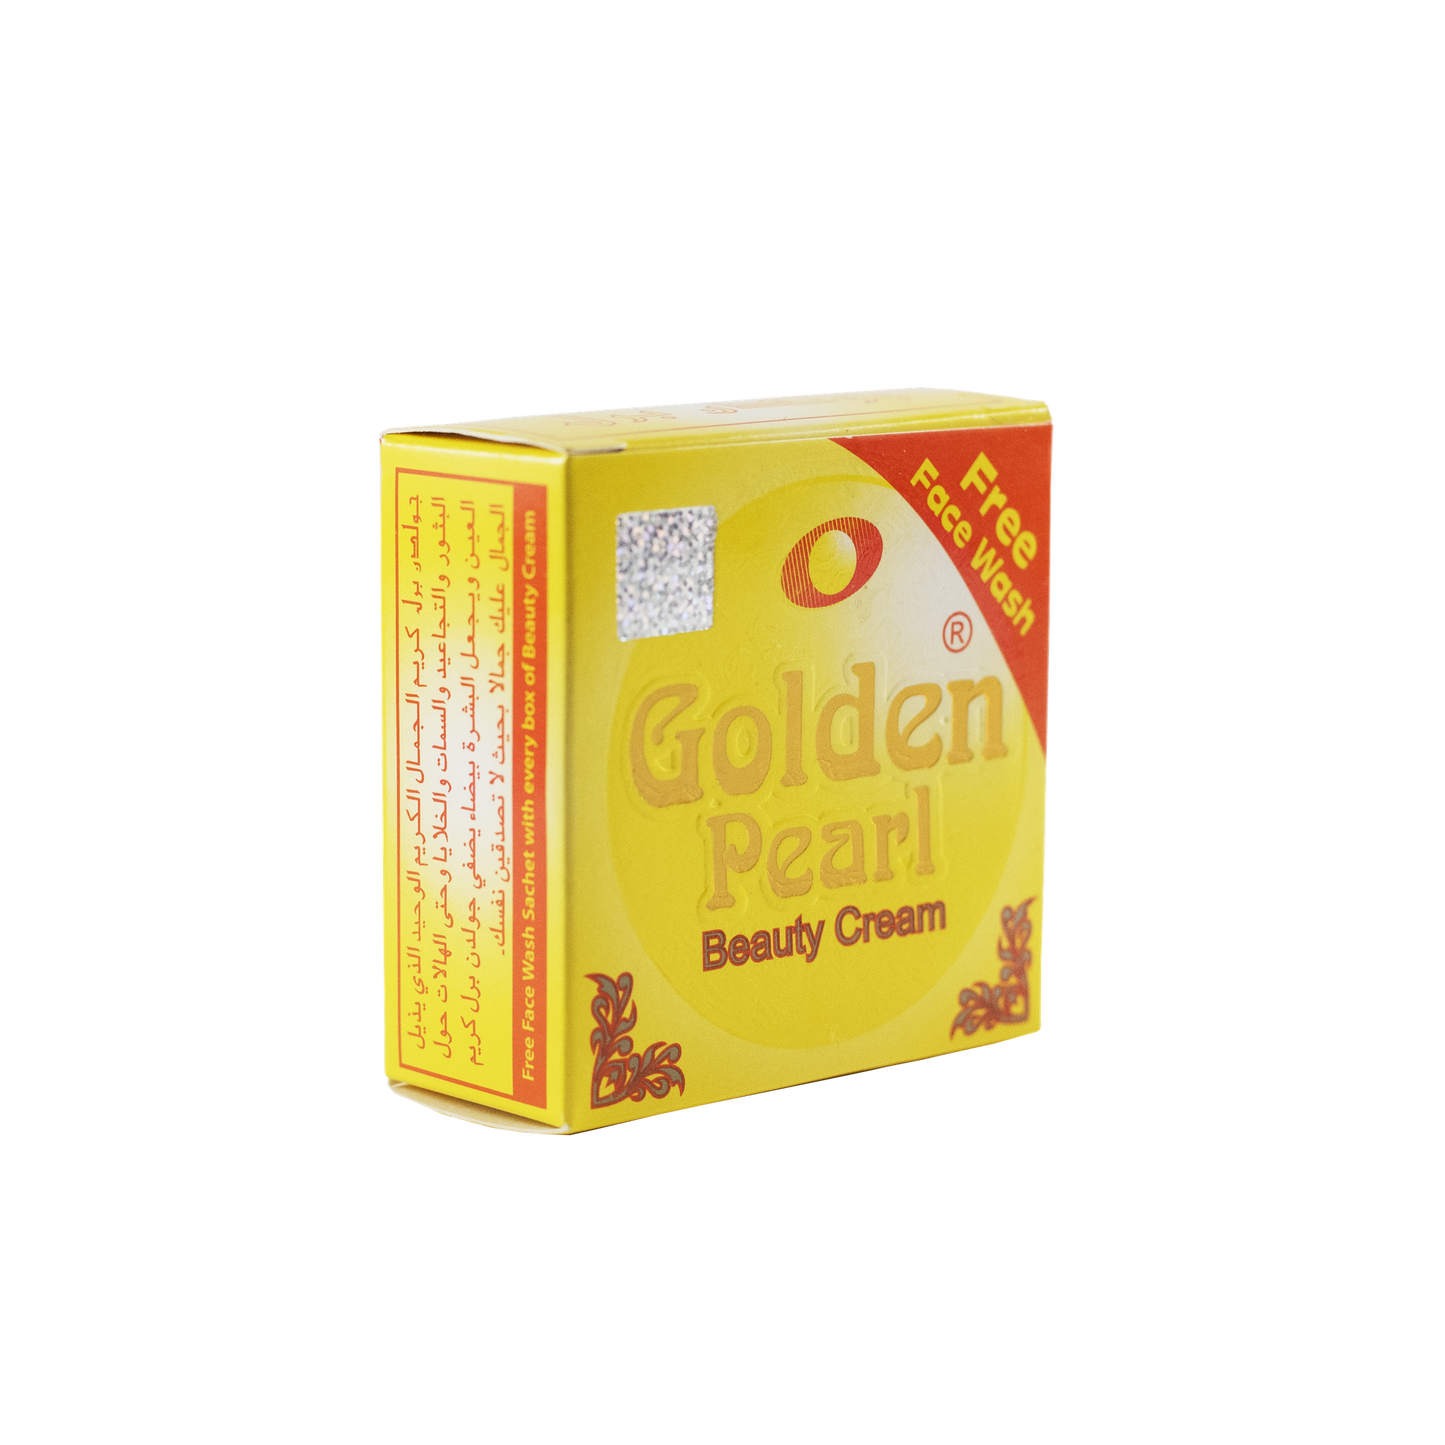 Golden Pearl Beauty Cream 28g